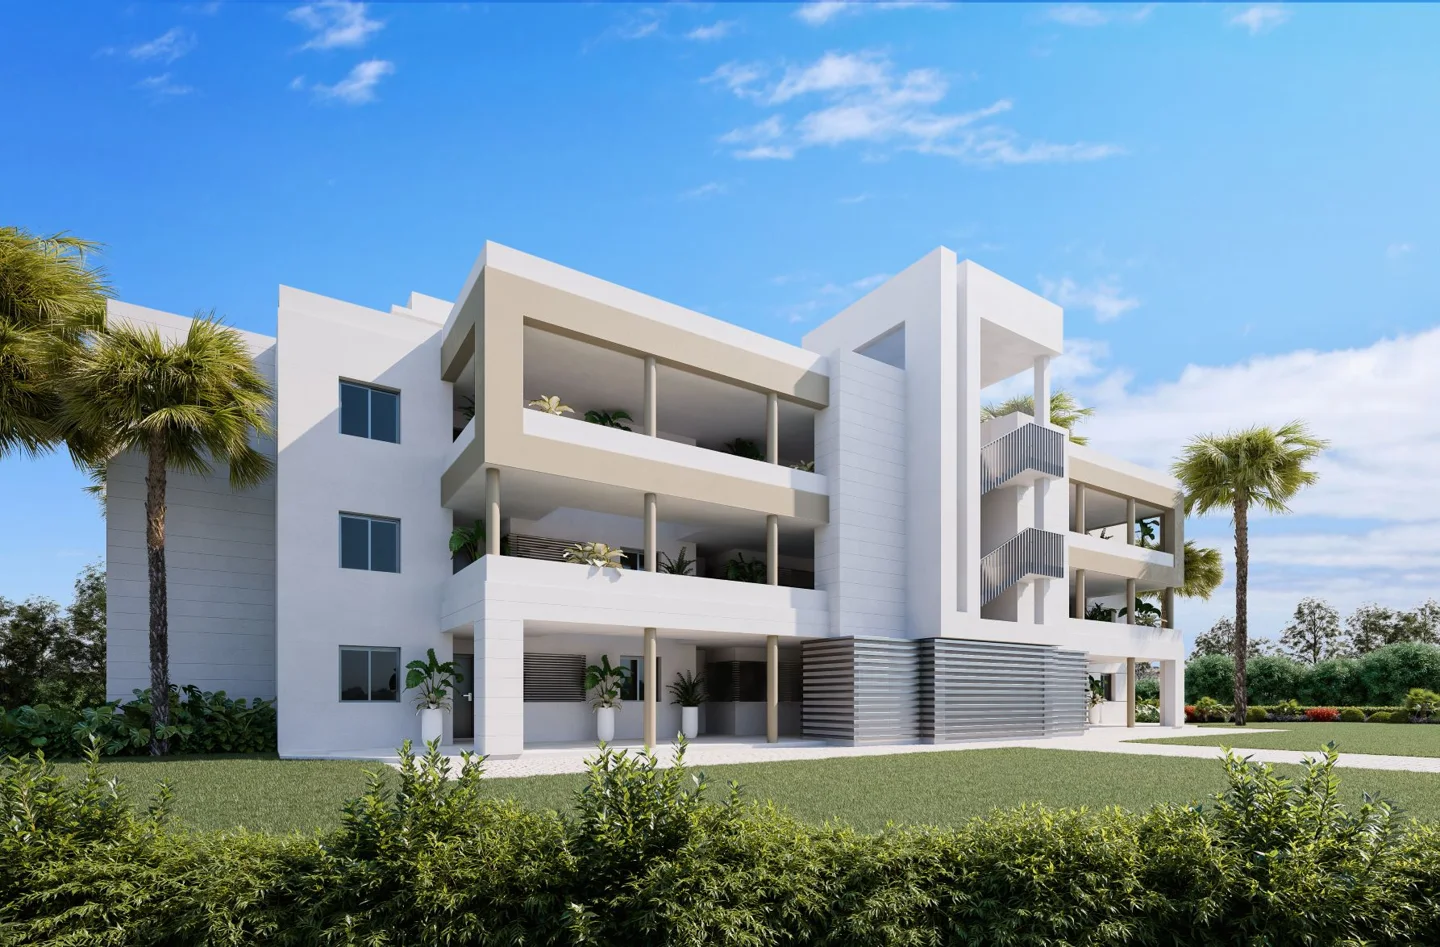 New Development - Frontline golf apartments